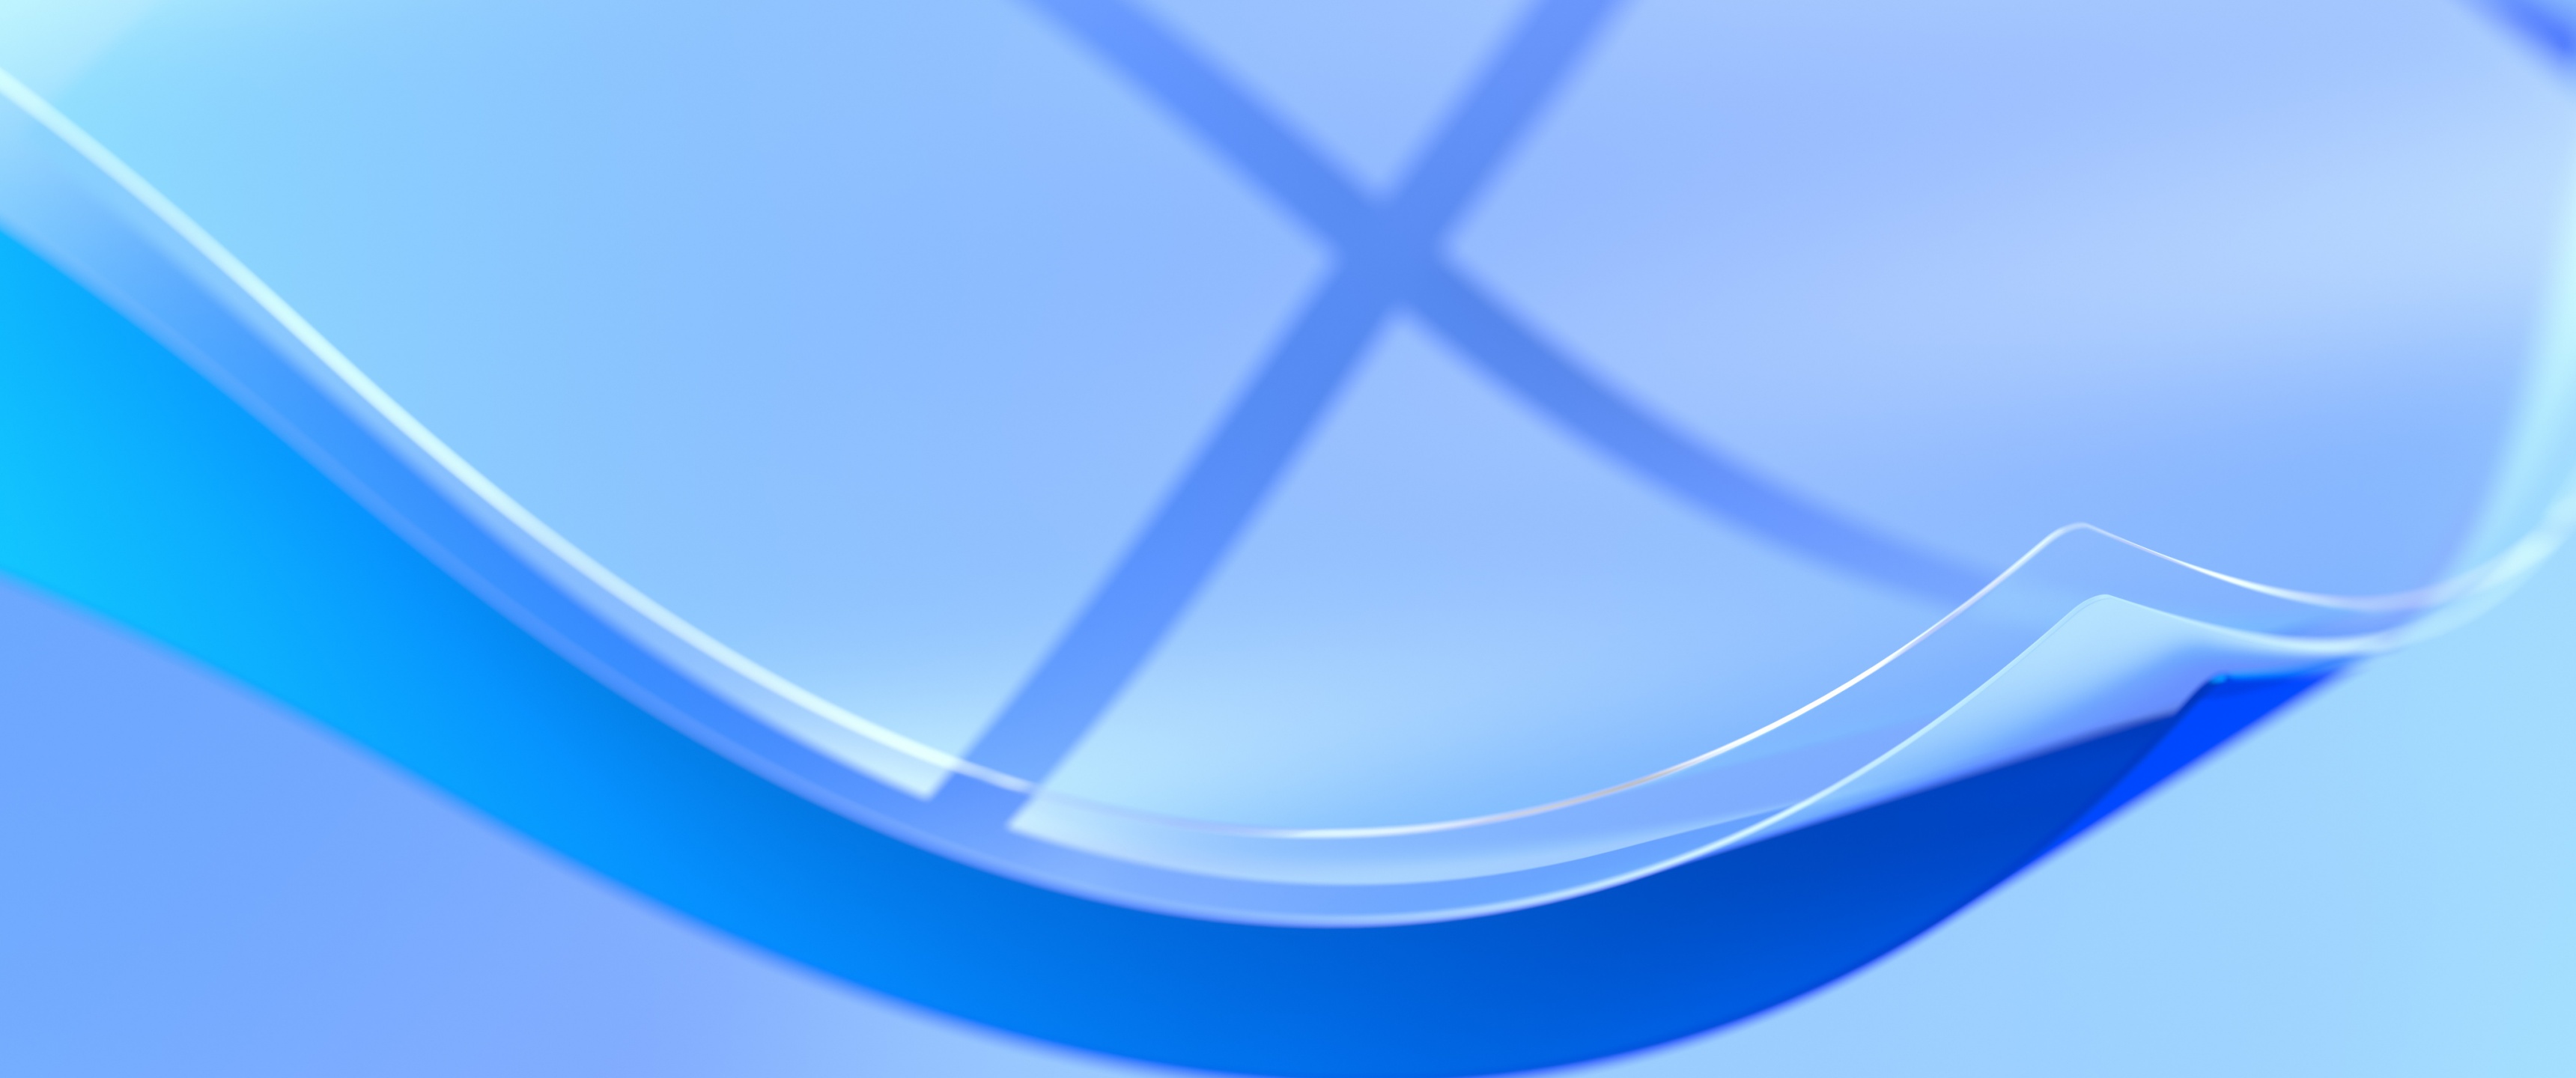 Windows 10 Wallpaper 4K, Blue background, Technology, #6916